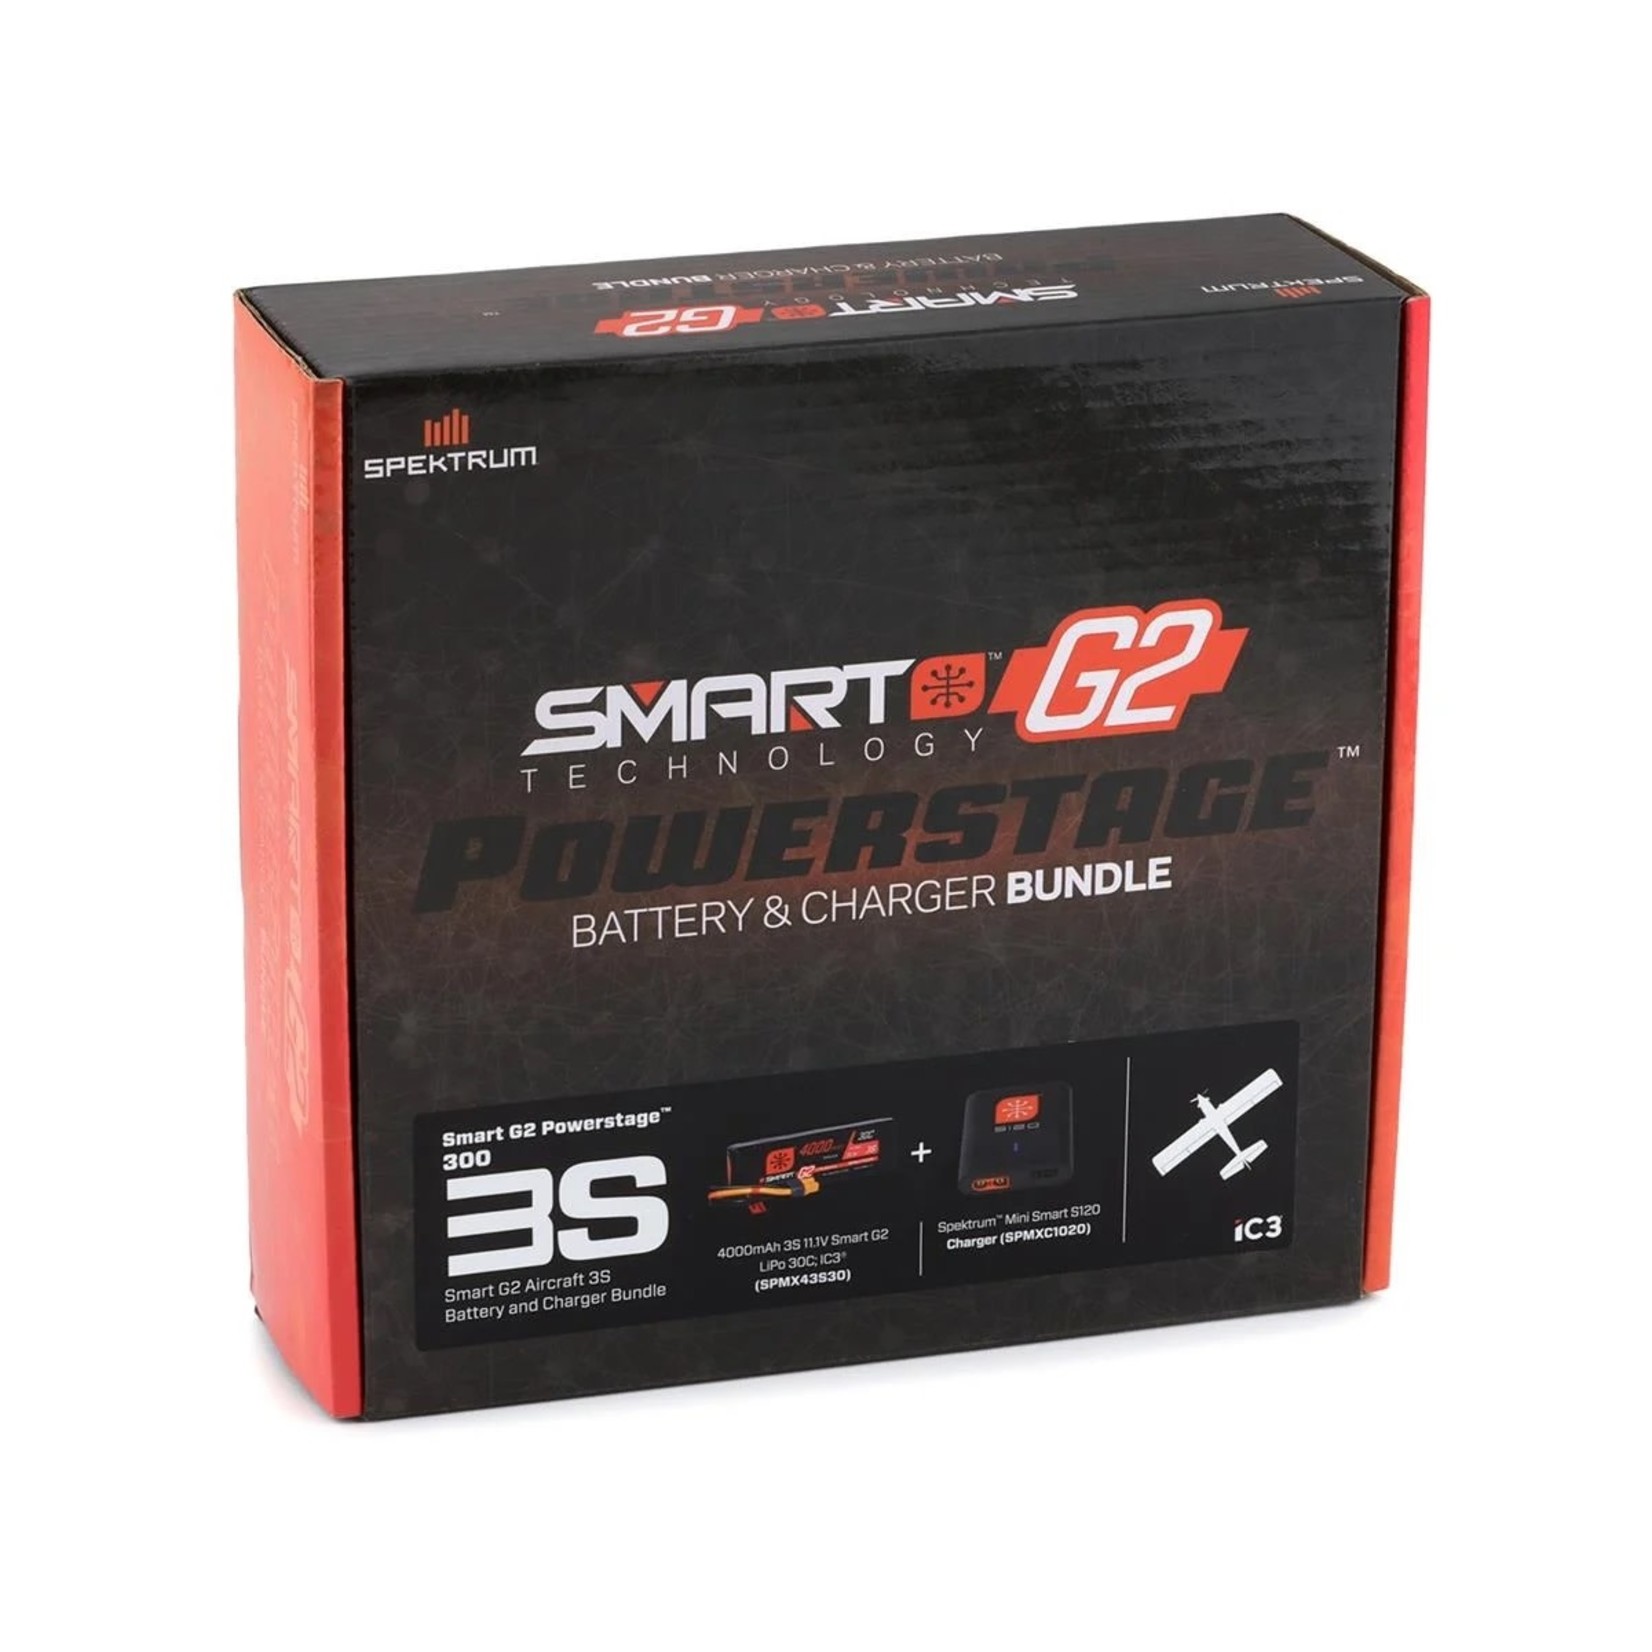 Spektrum Spektrum RC Smart G2 Powerstage Air Bundle w/3S Smart LiPo Battery (4000mAh) #SPMXPSA300